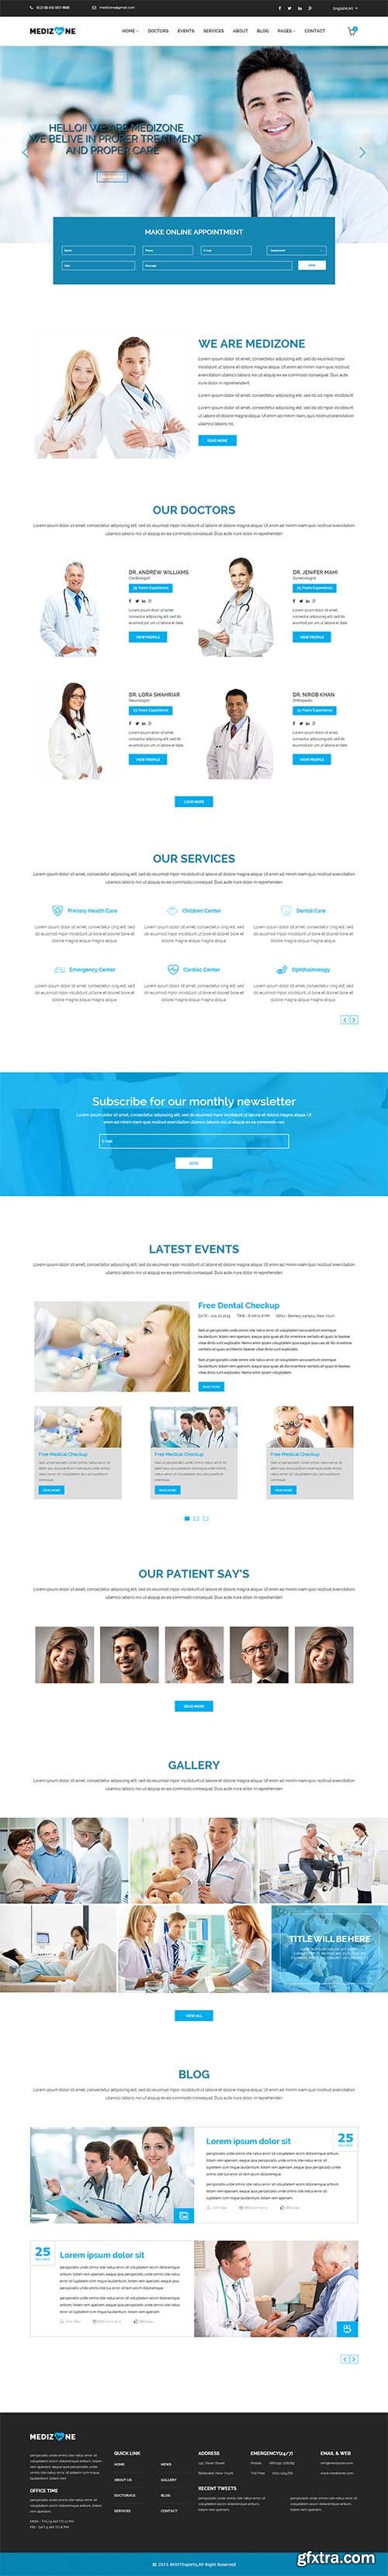 Medizone – Health Care & Medical HTML5 Template